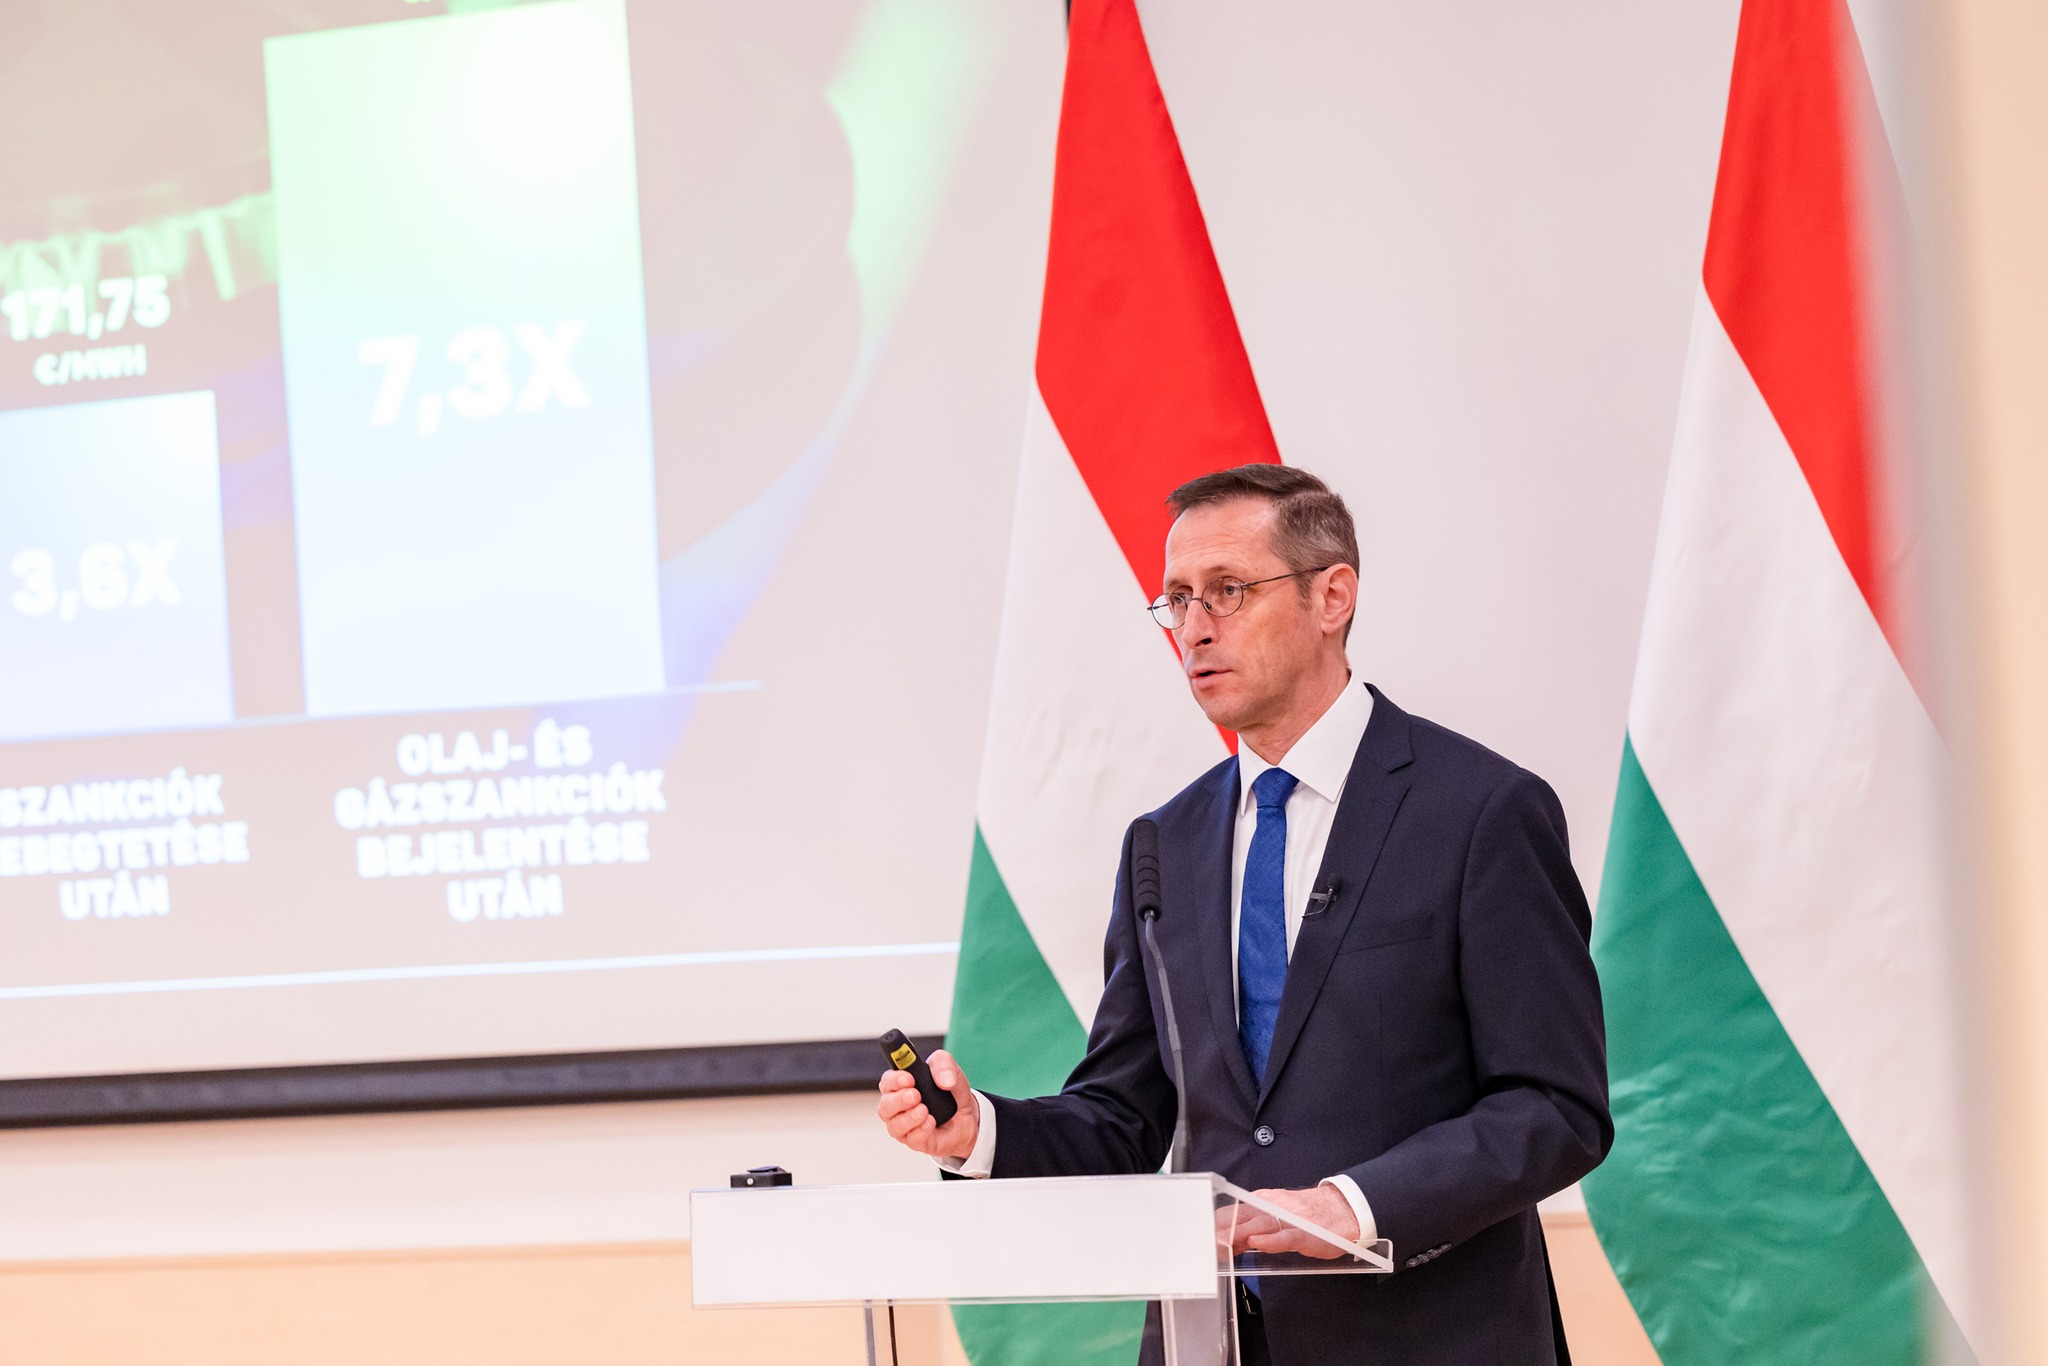 Hungary Issues Euro 1 Billion of Green Eurobonds